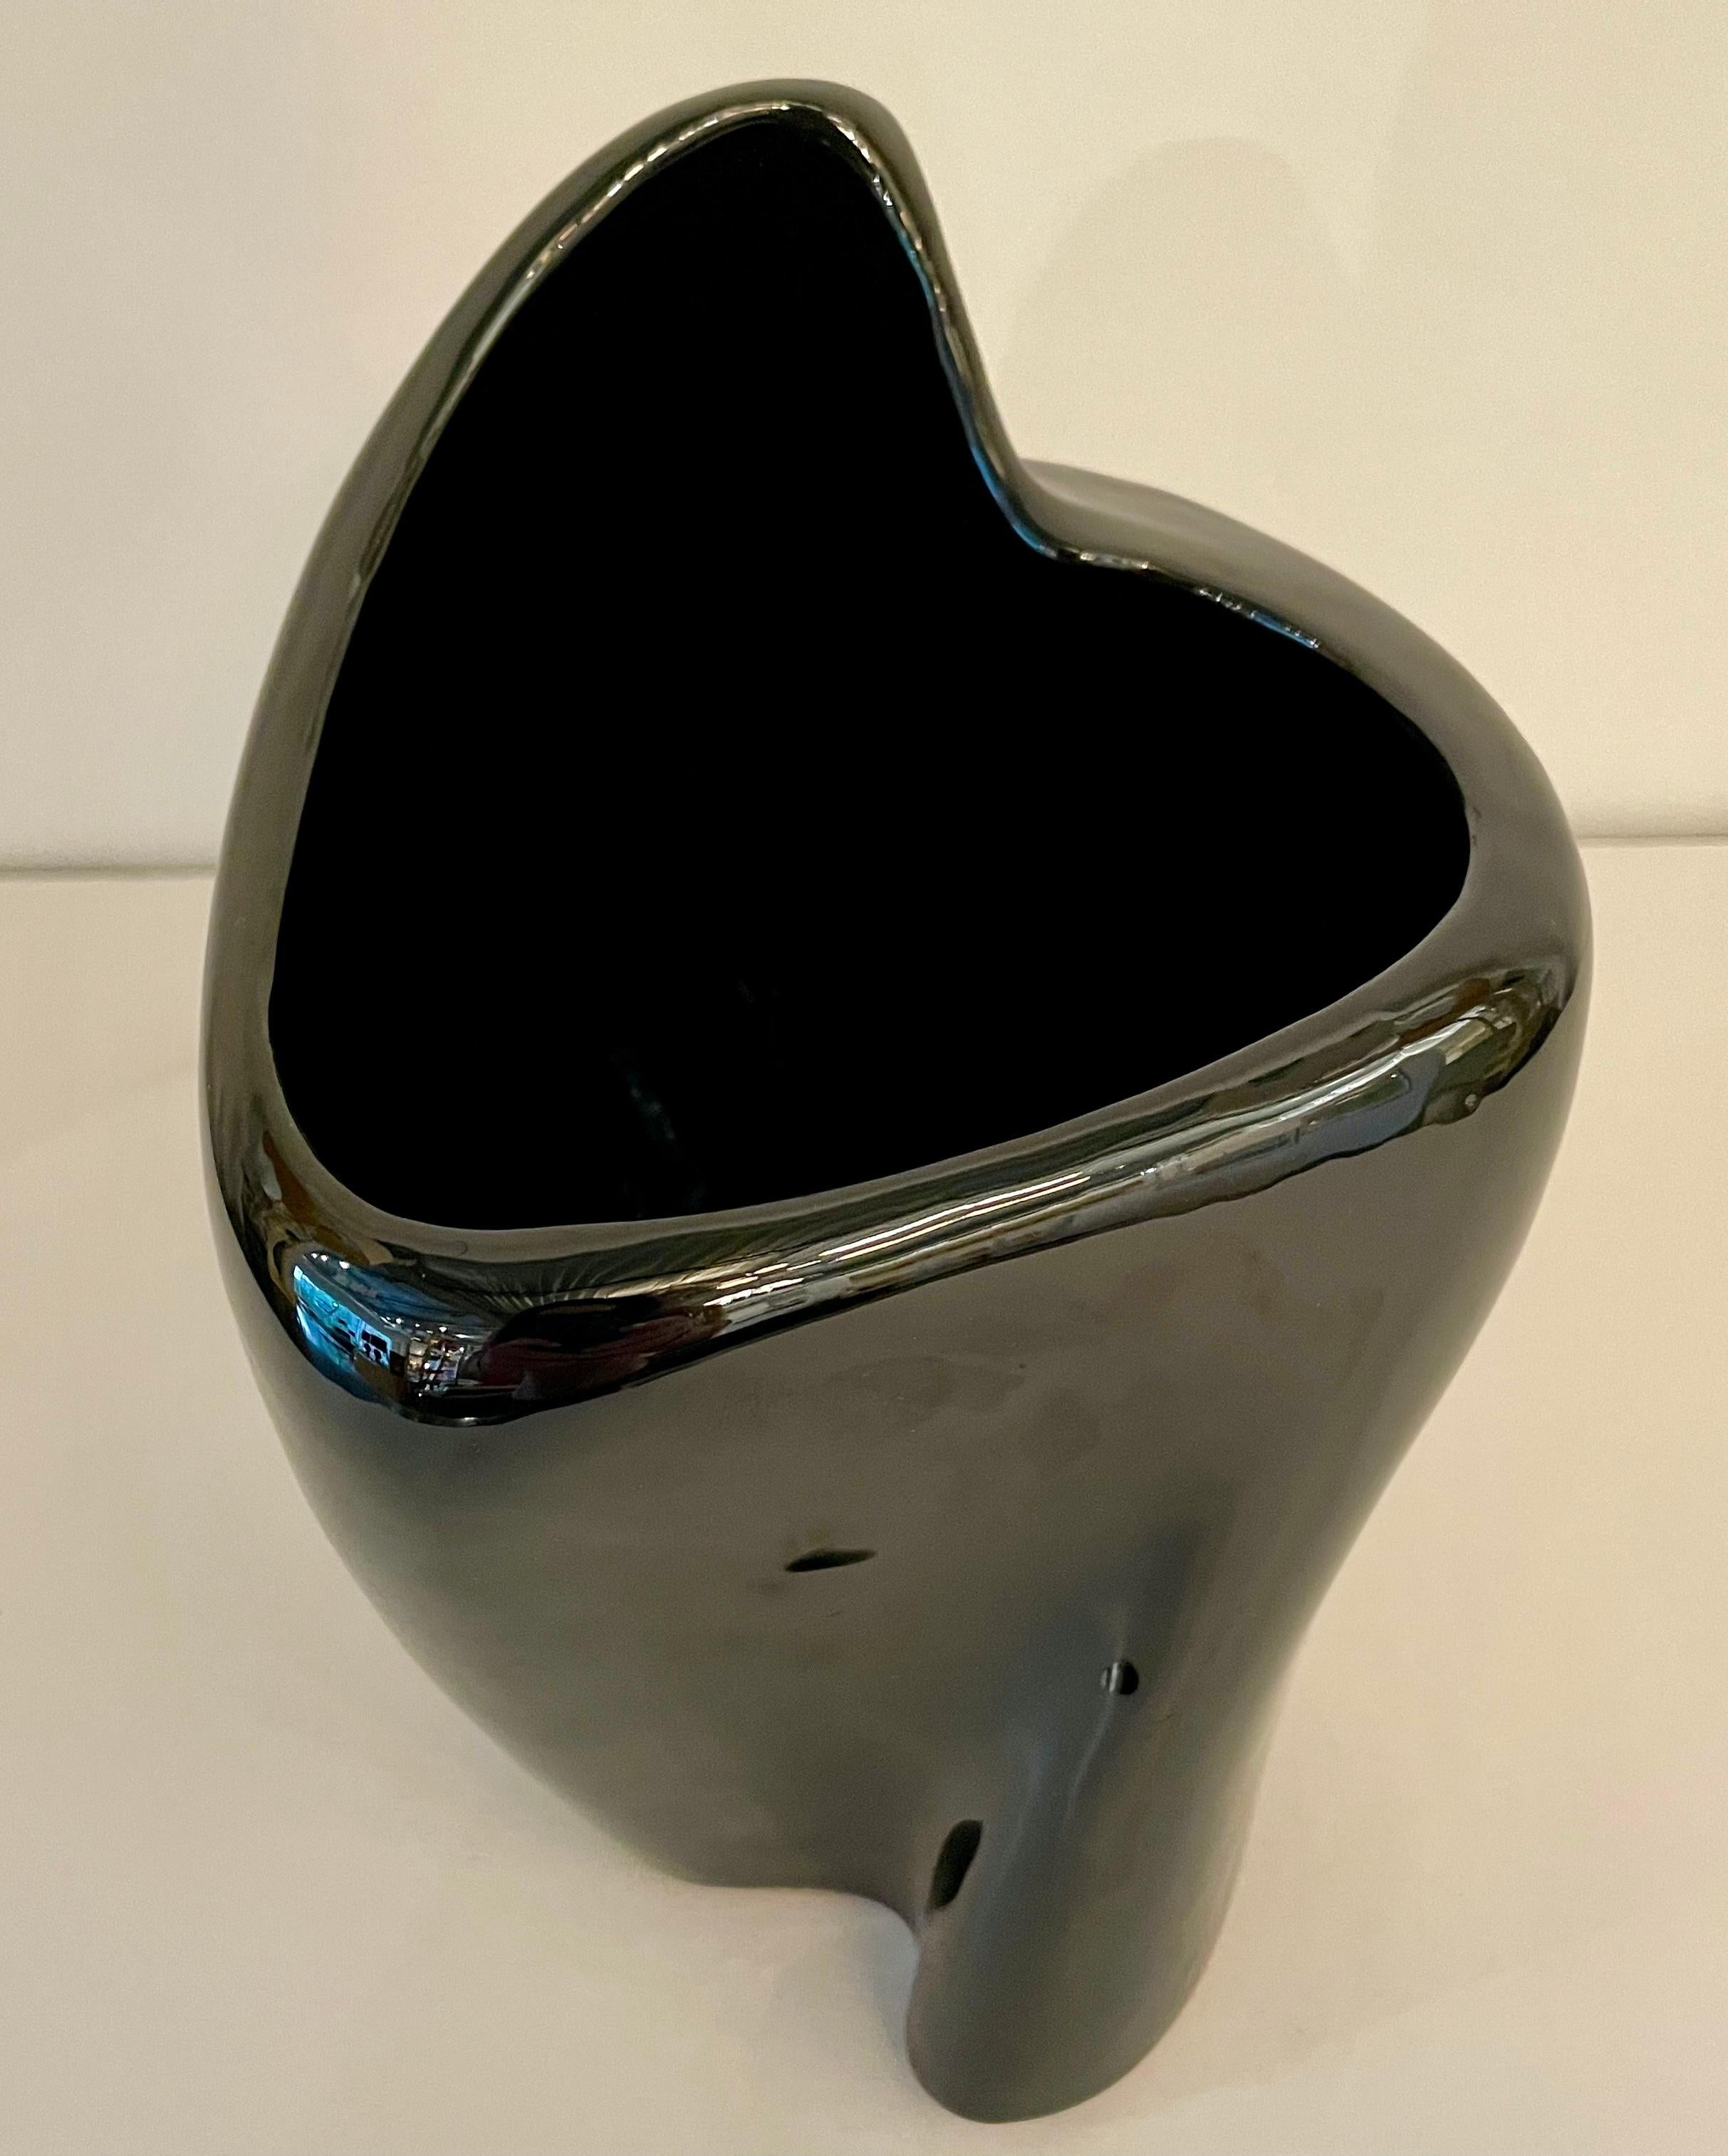 Black Glazed Pottery Organically Shaped Vase or Vessel by Frankoma For Sale 6